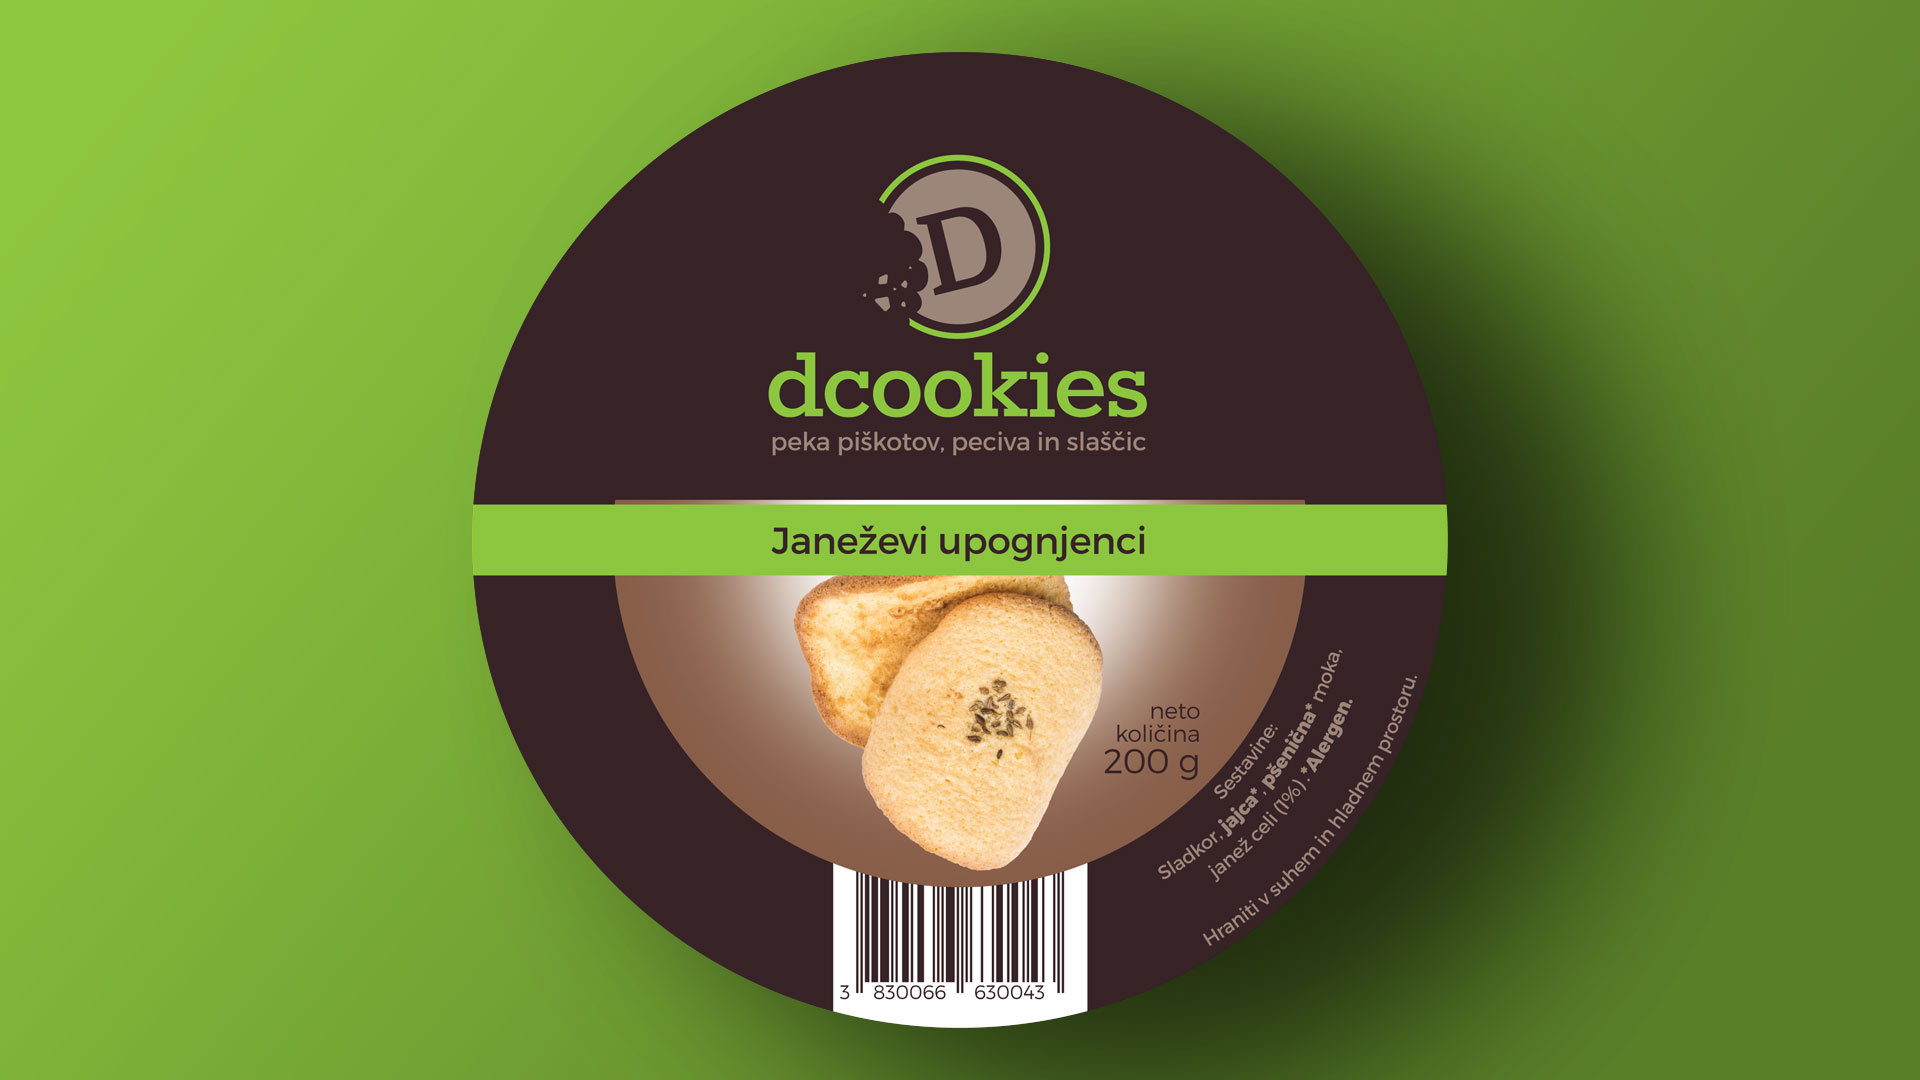 dcookies-etiketa-janeževi upognjenci 2